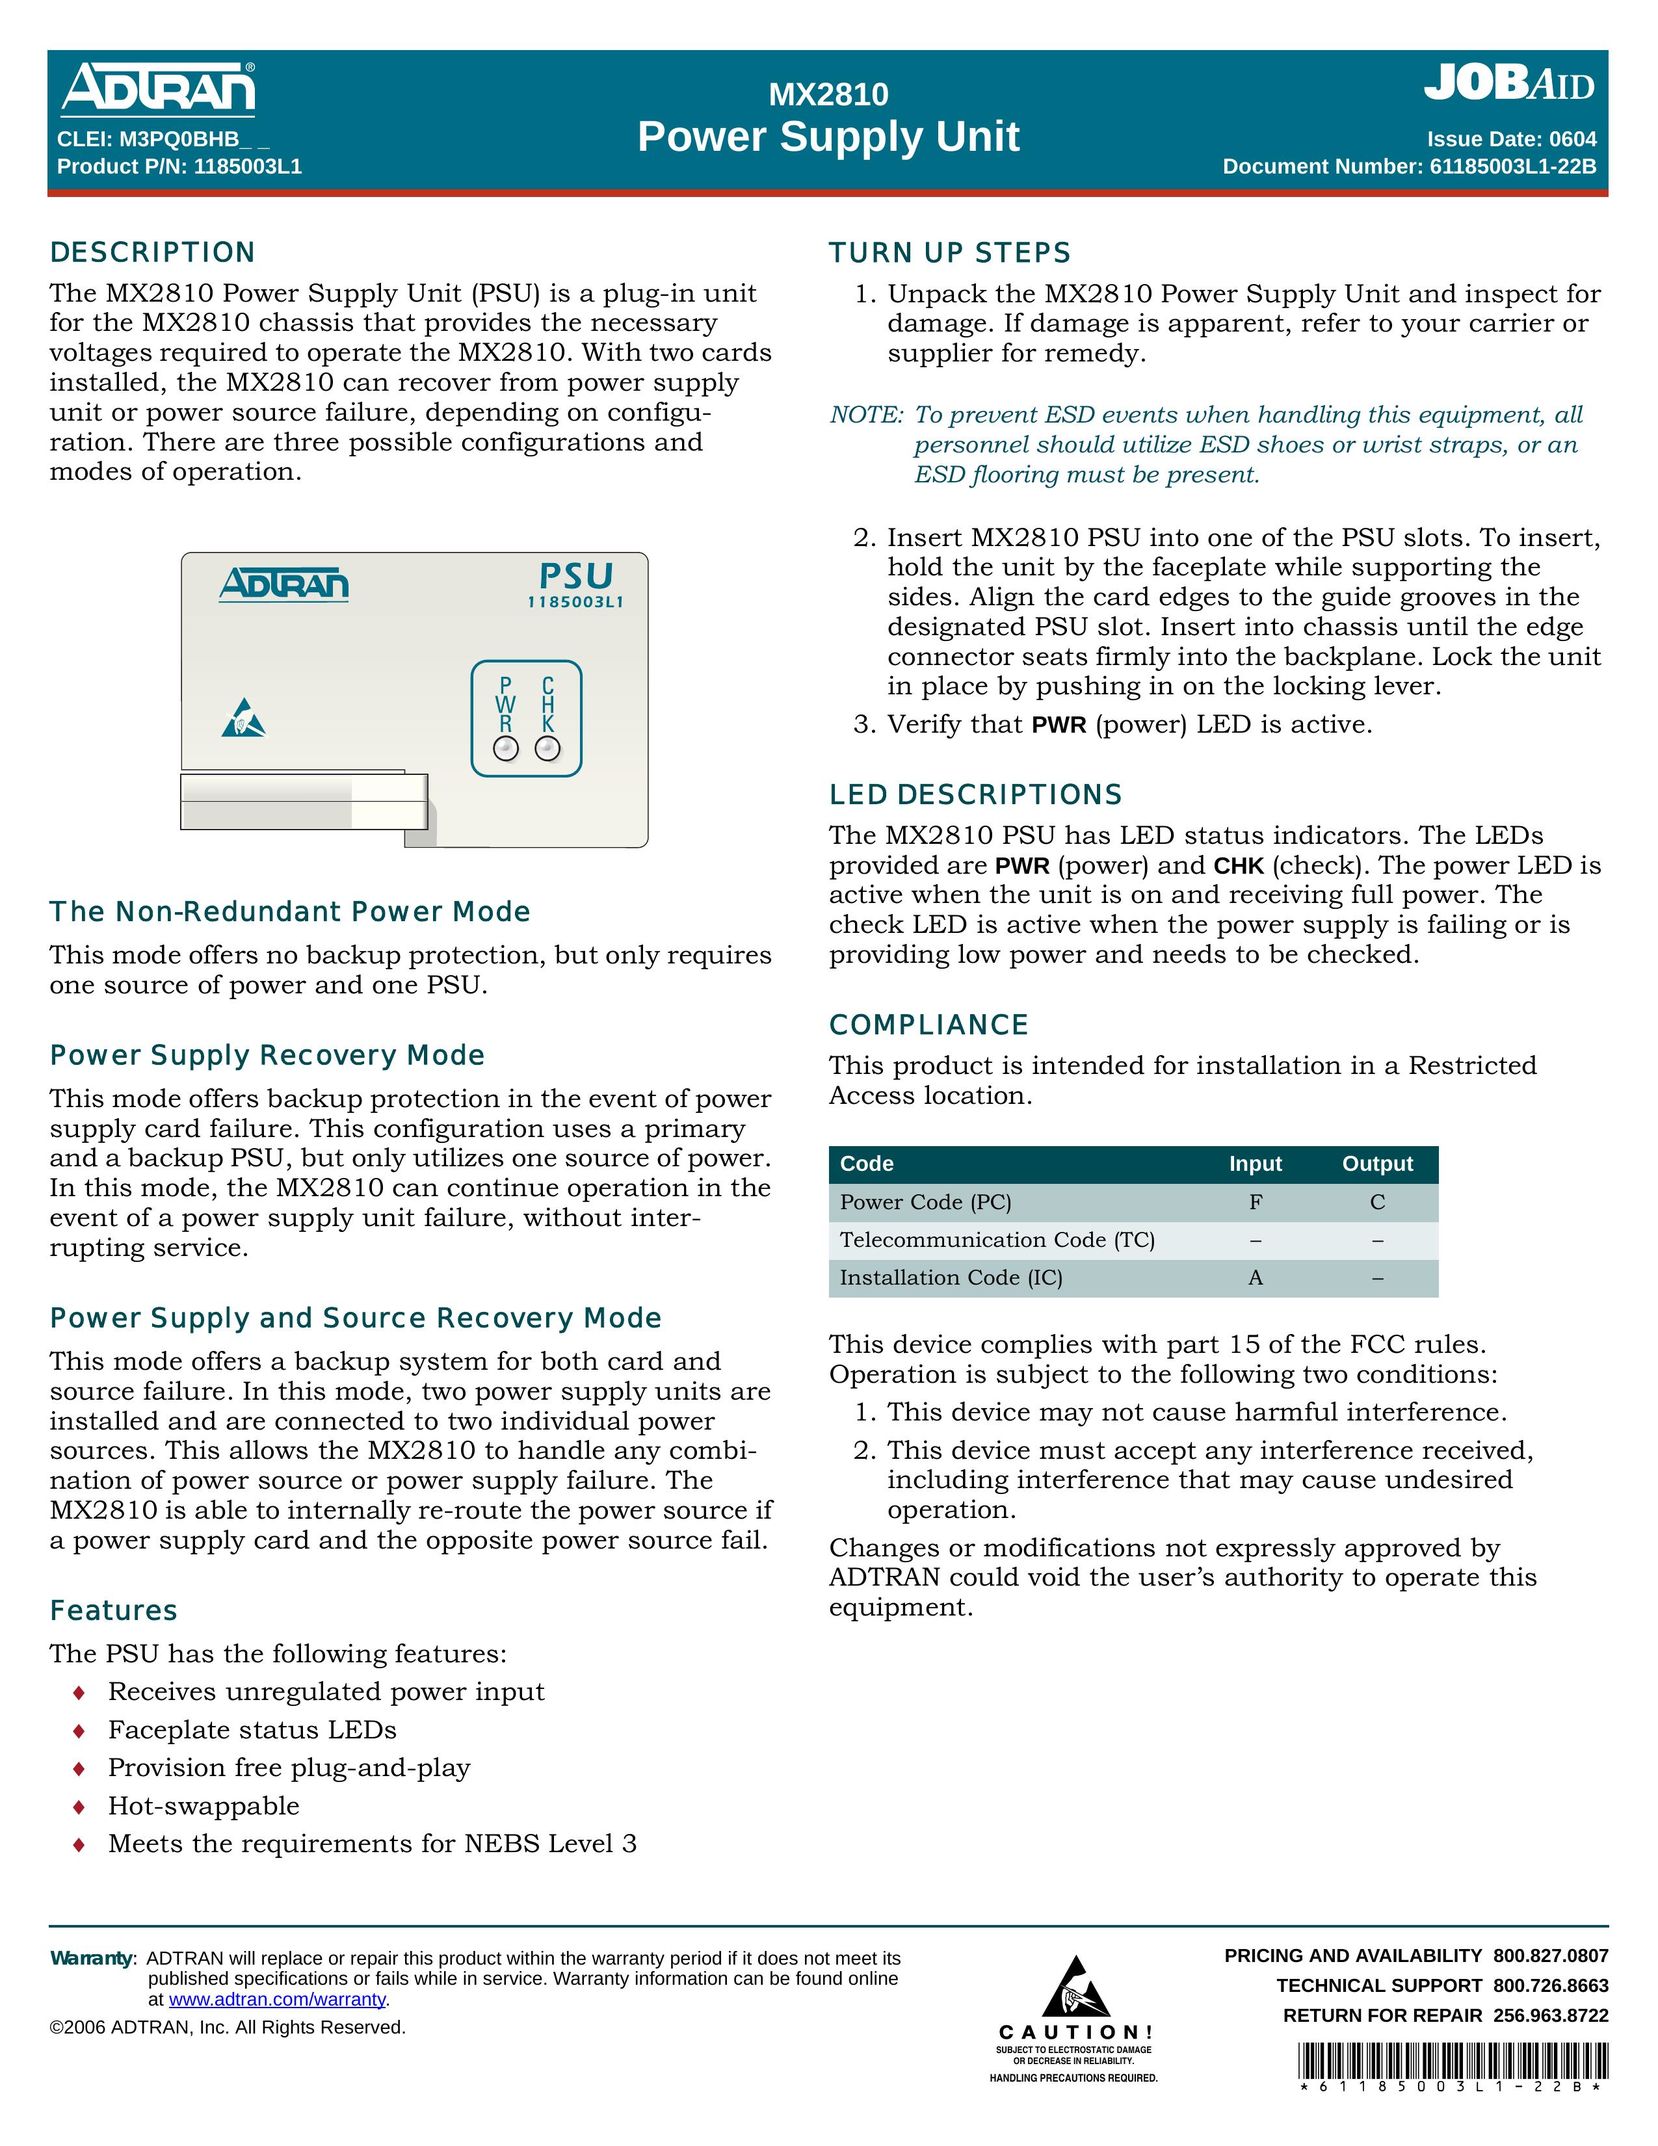 ADTRAN MX2810 Power Supply User Manual